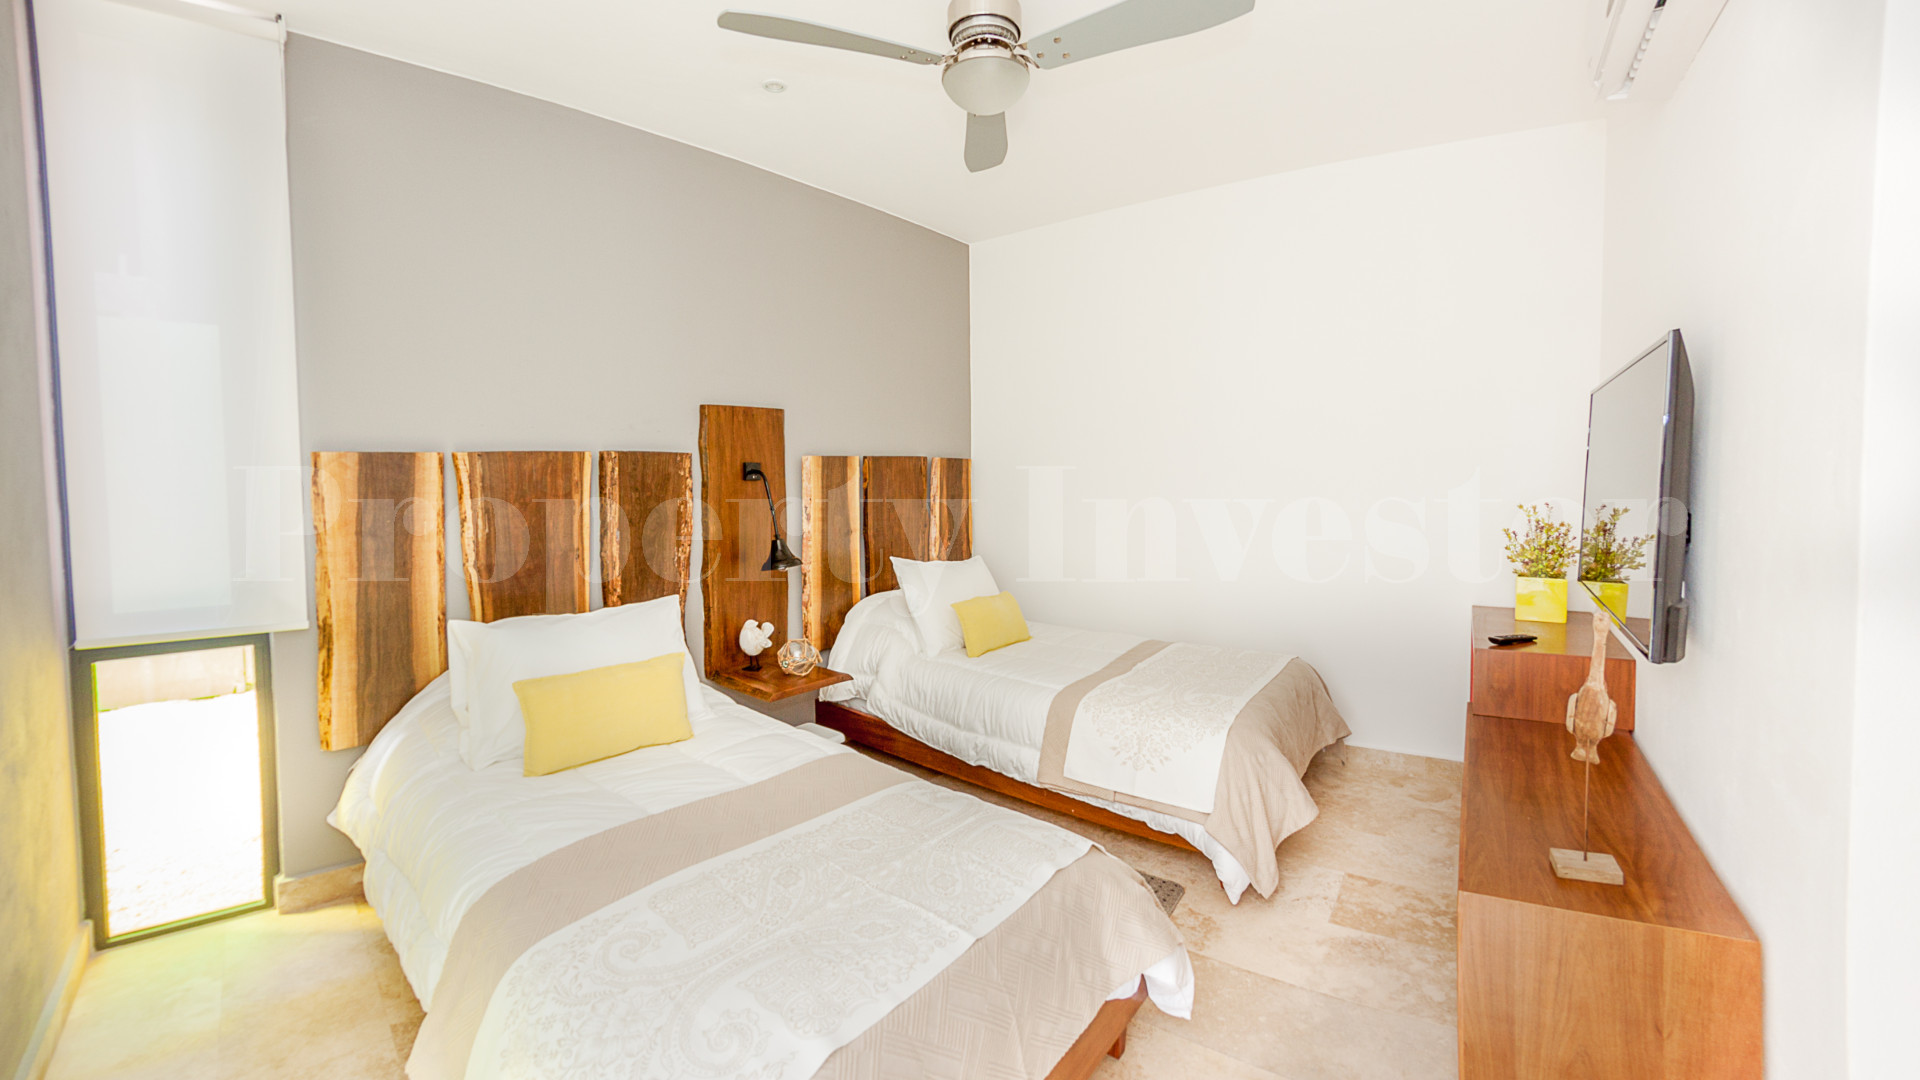 3 Bedroom Boutique Penthouse in Tulum (Unit 304)